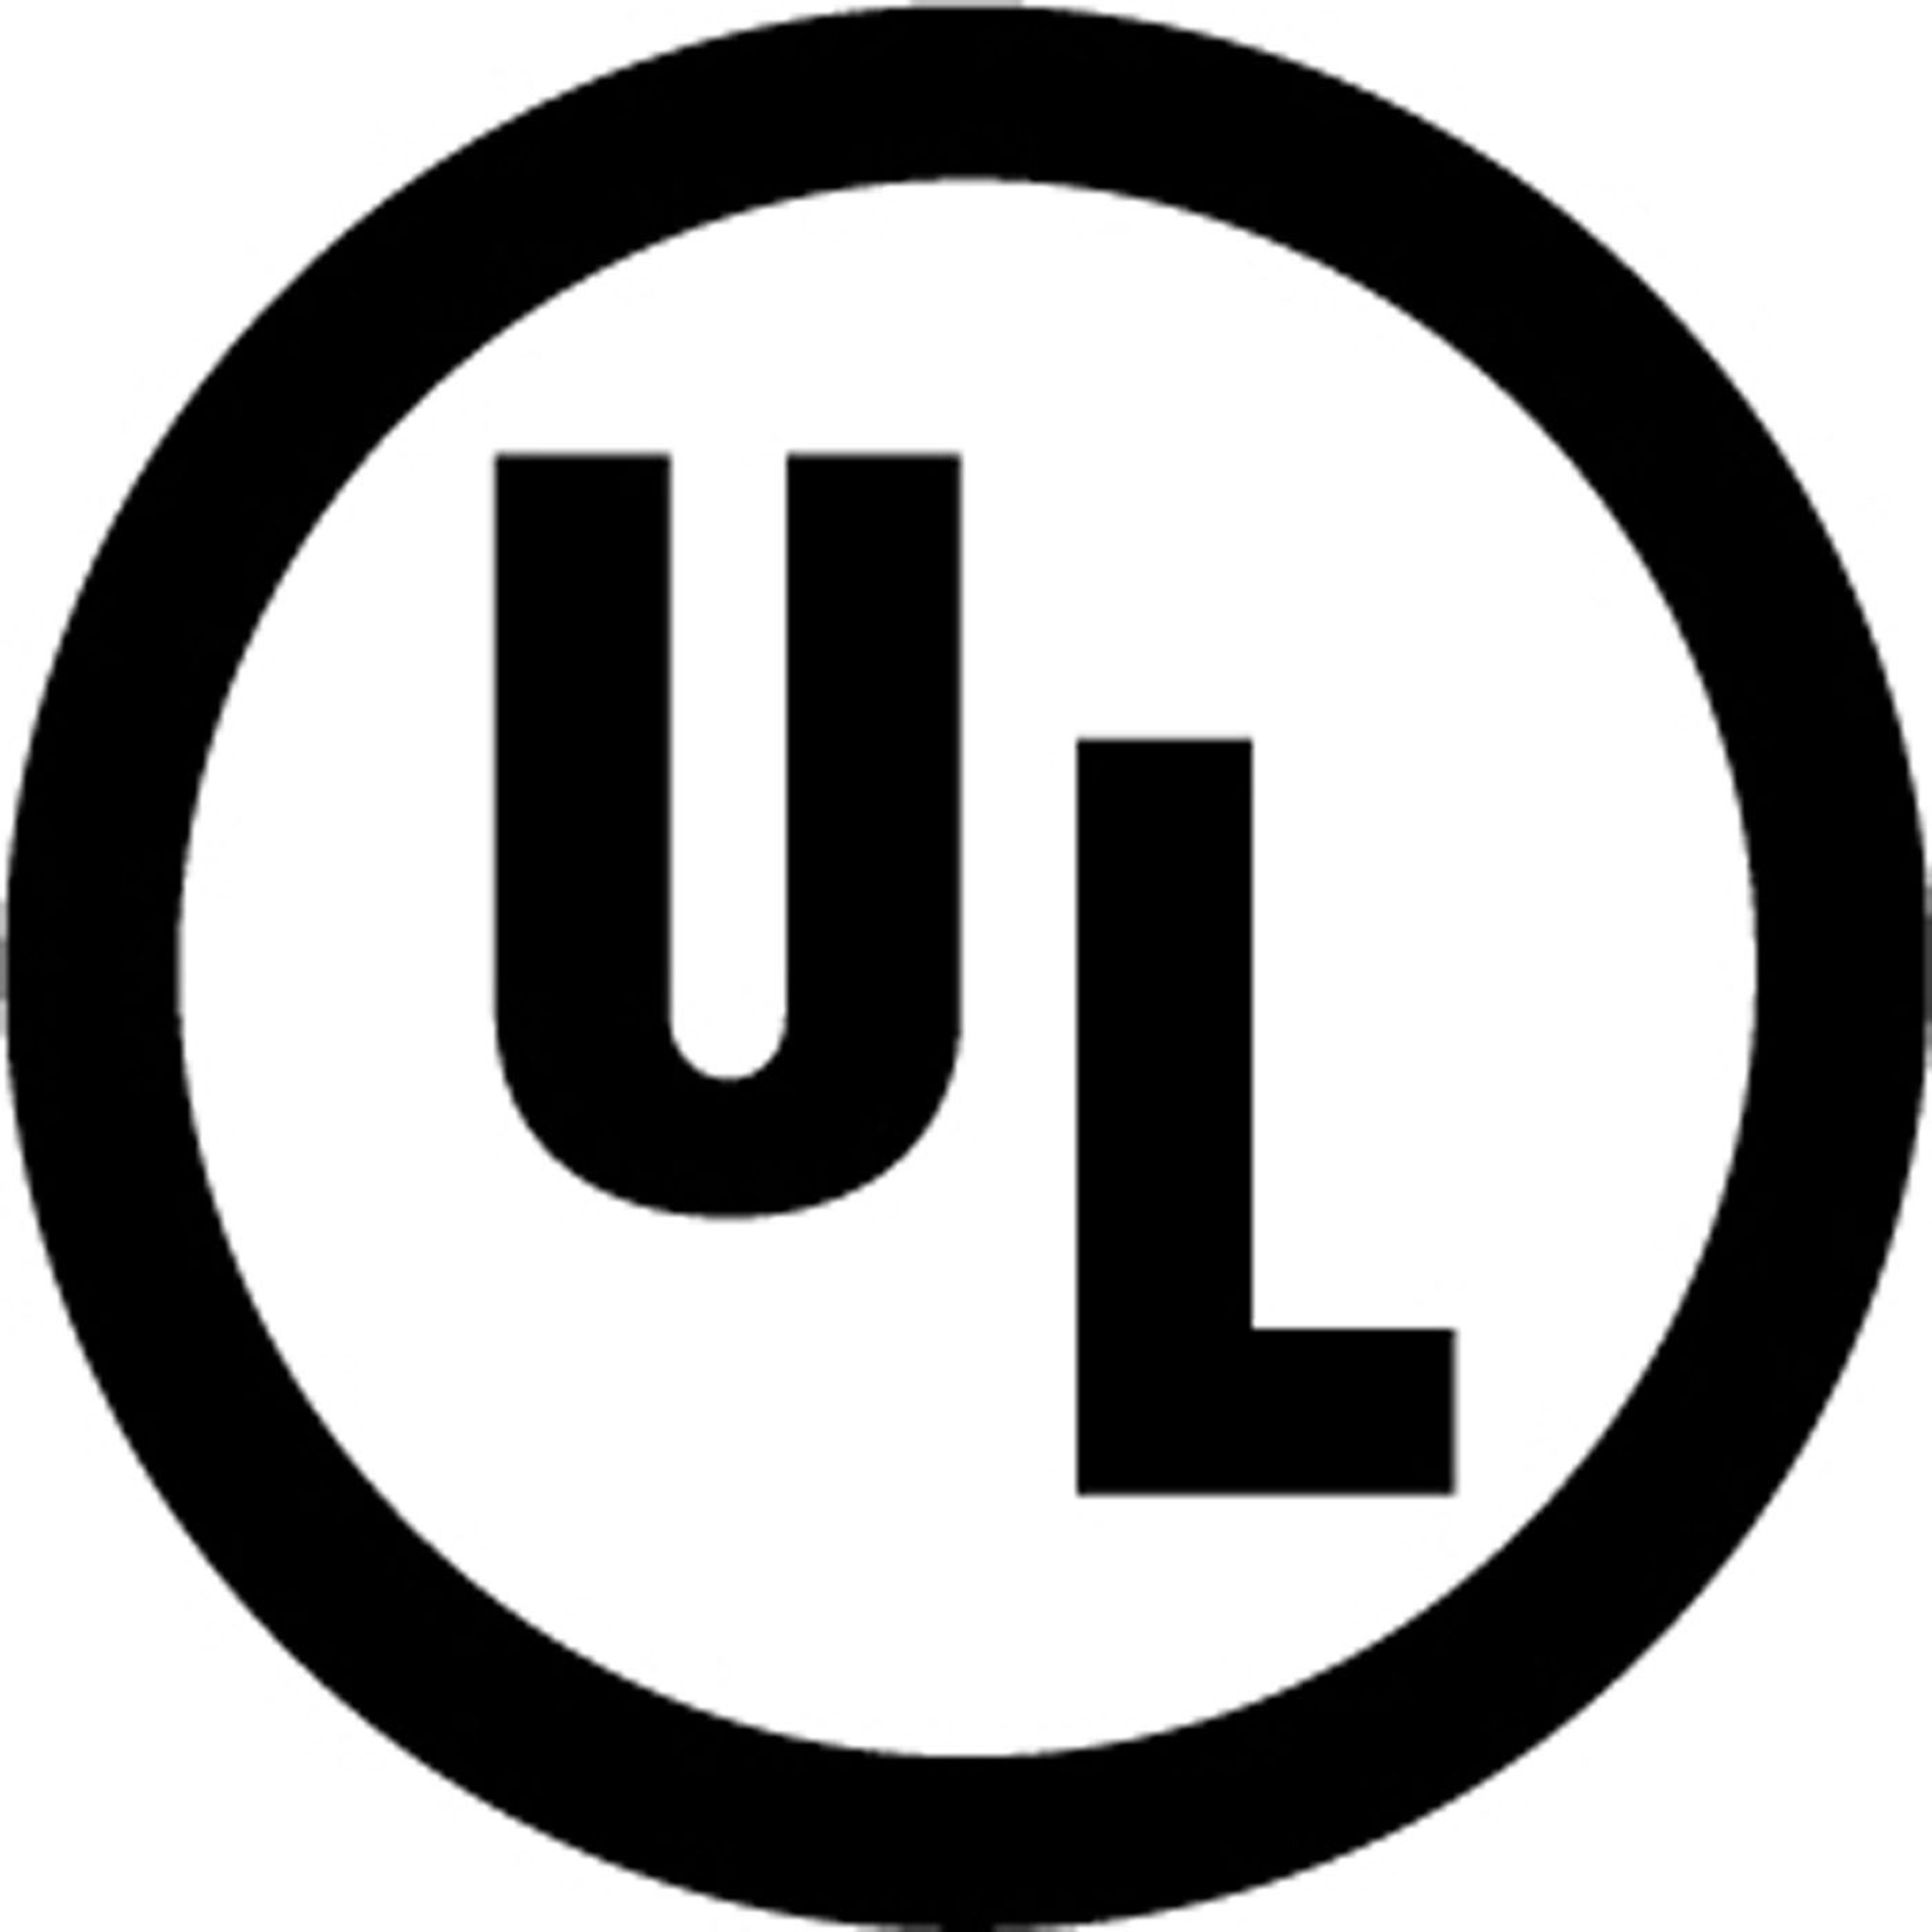 UL and the UL logo are trademarks of Underwriters Laboratories, Inc. (C) 2012. (PRNewsFoto/Underwriters Laboratories)